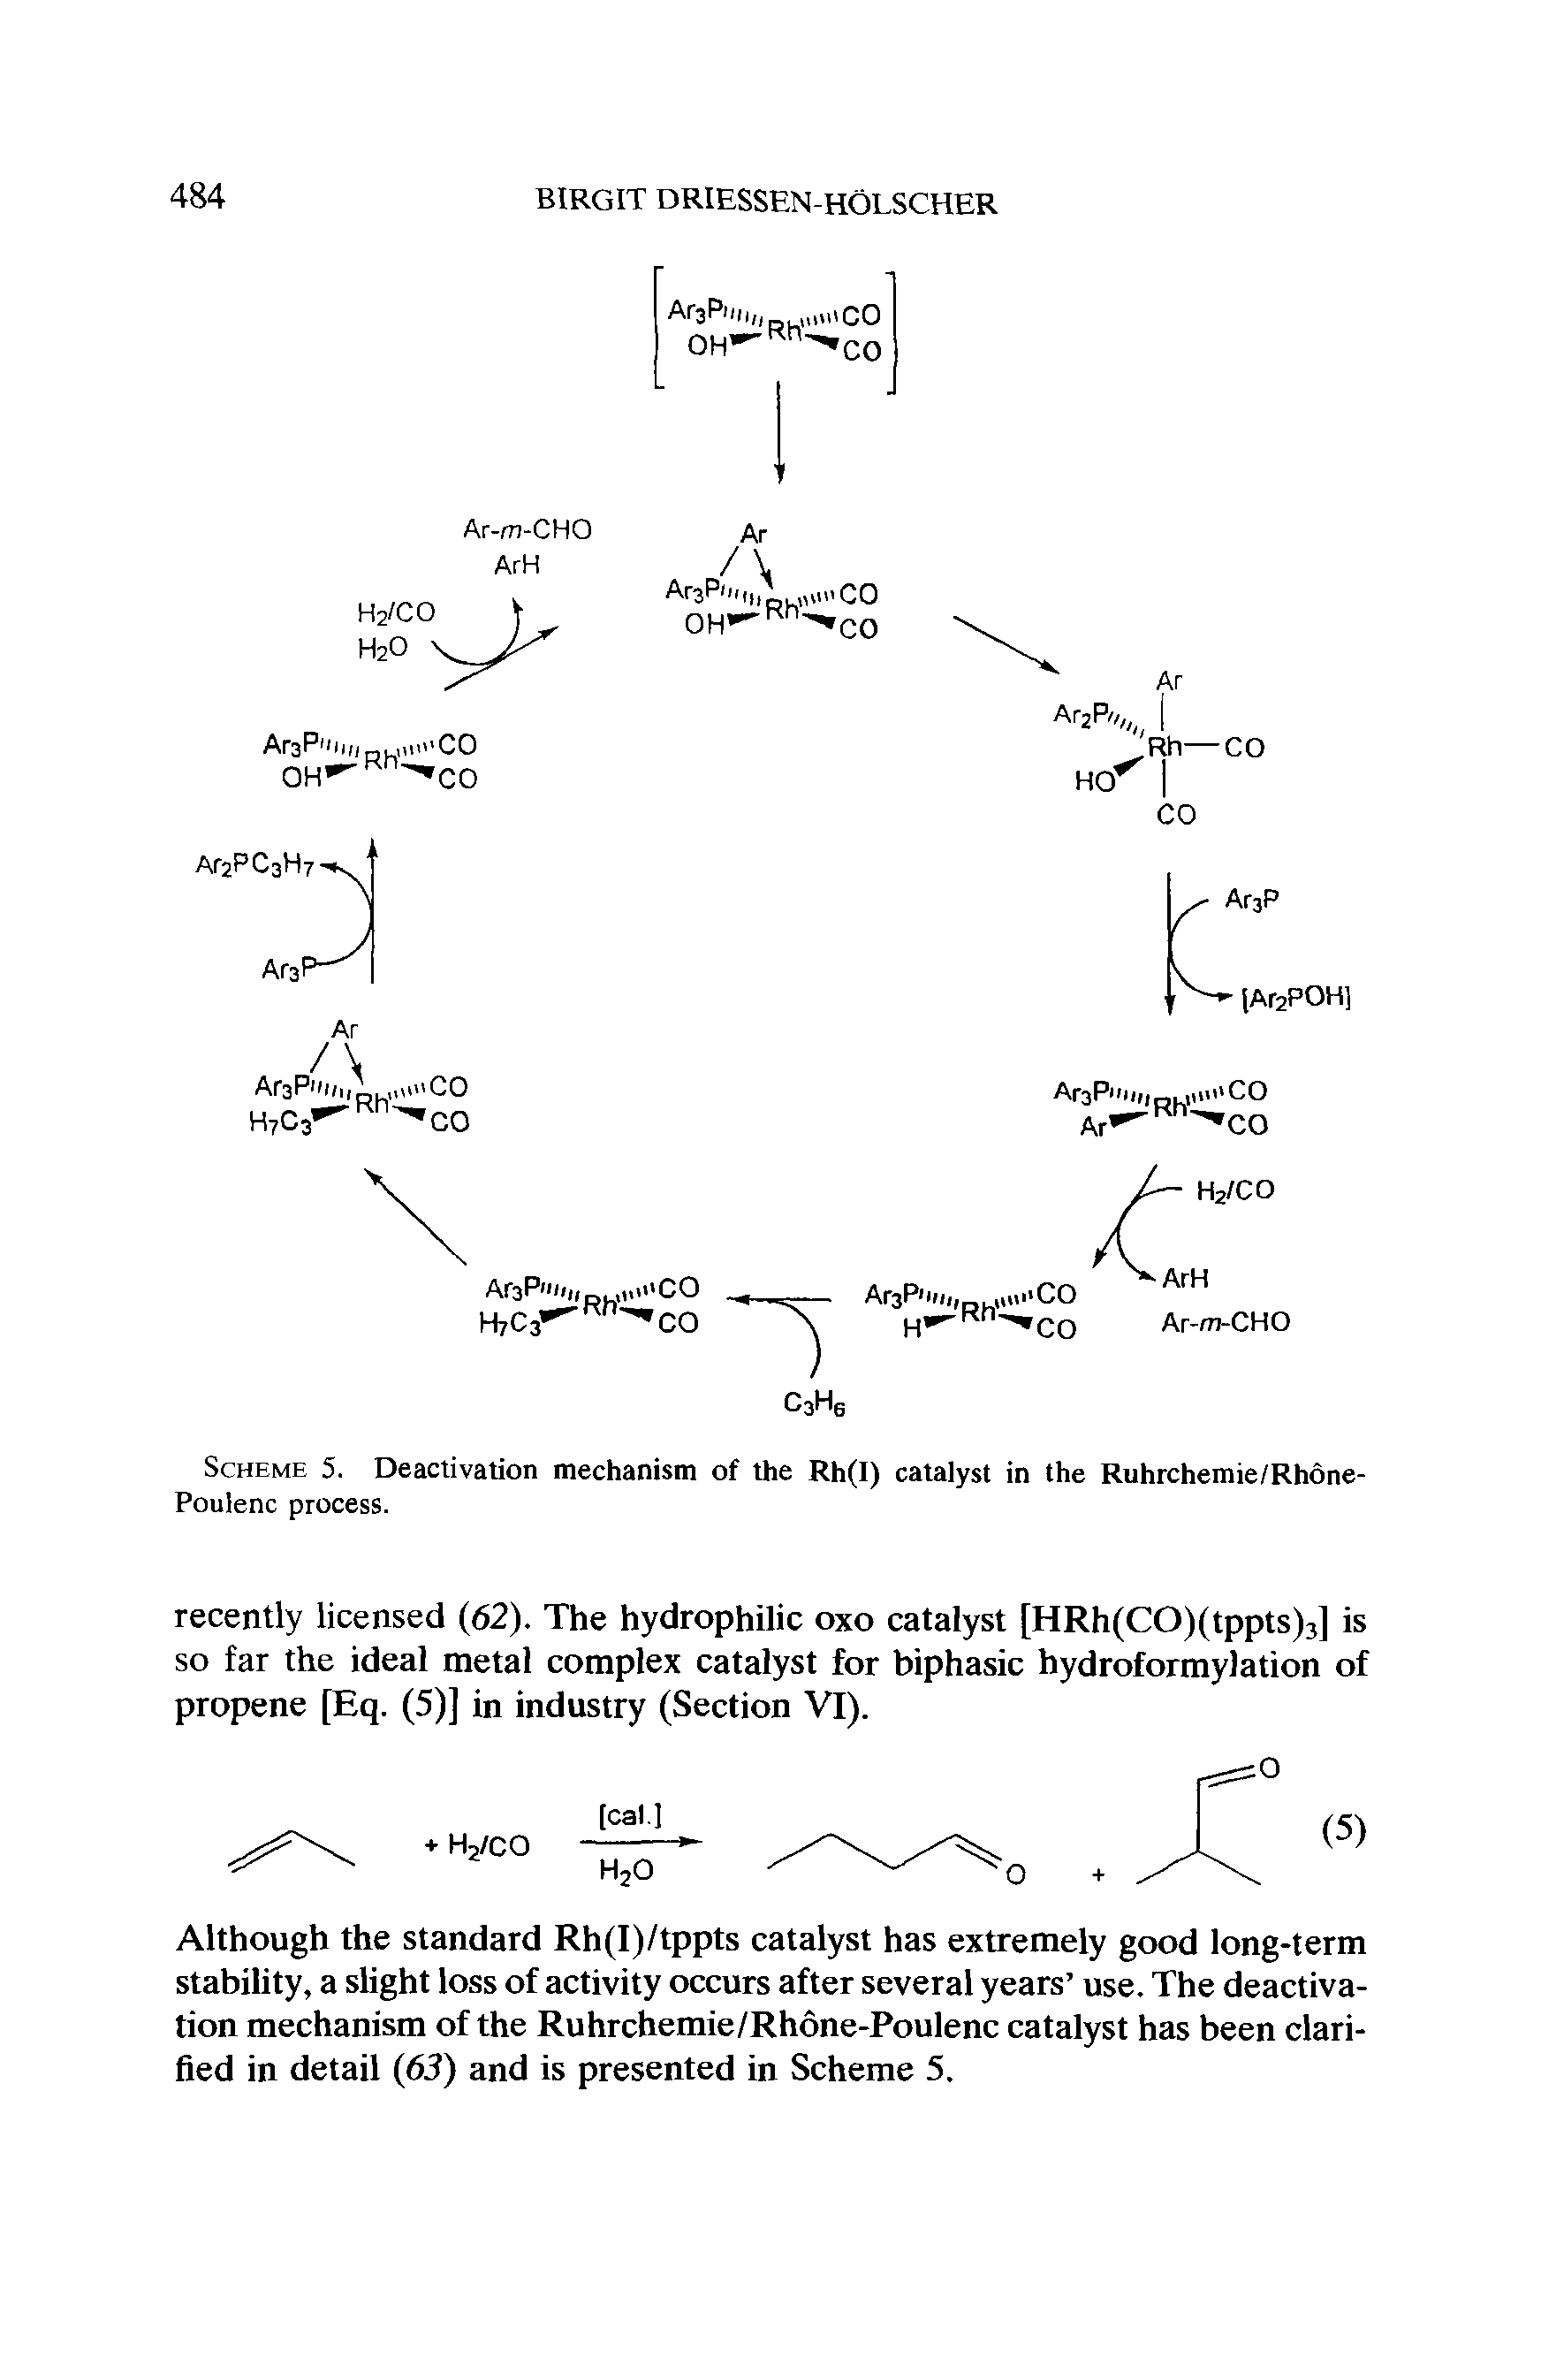 Scheme 5. Deactivation mechanism of the Rh(I) catalyst in the Ruhrchemie/Rhone-Poulenc process.